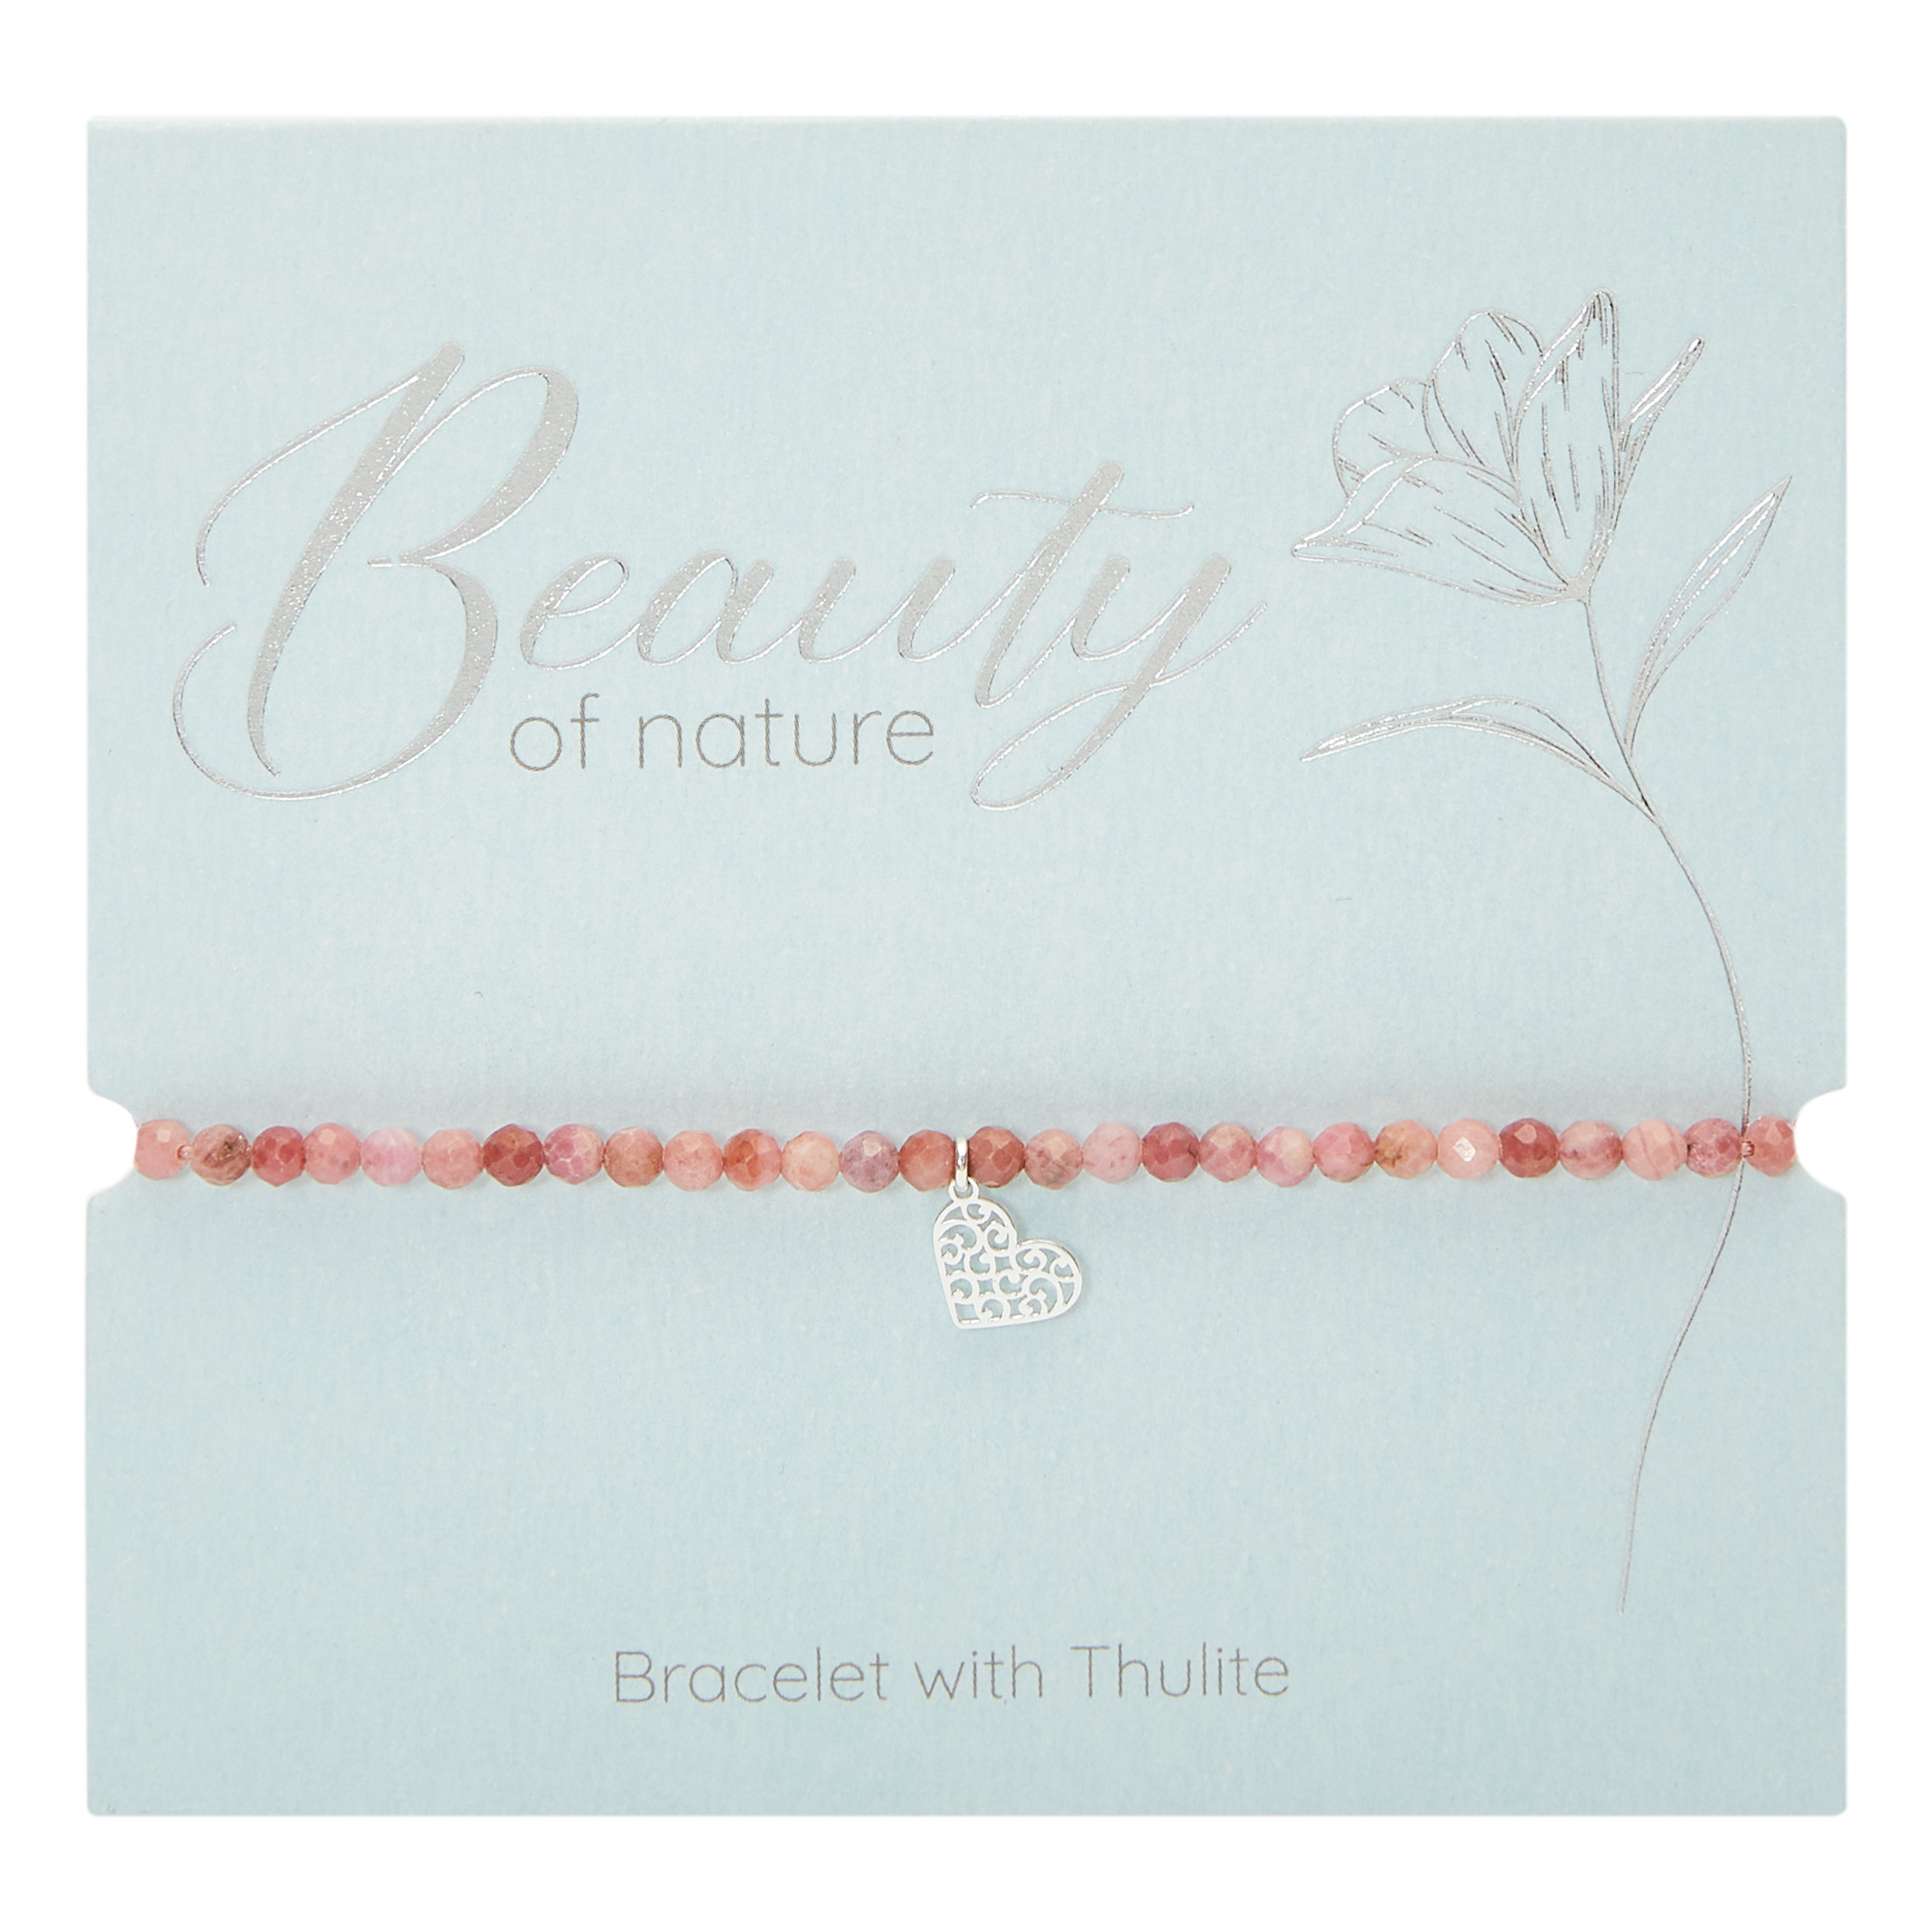 Displaypaket Armbänder "Beauty of nature"